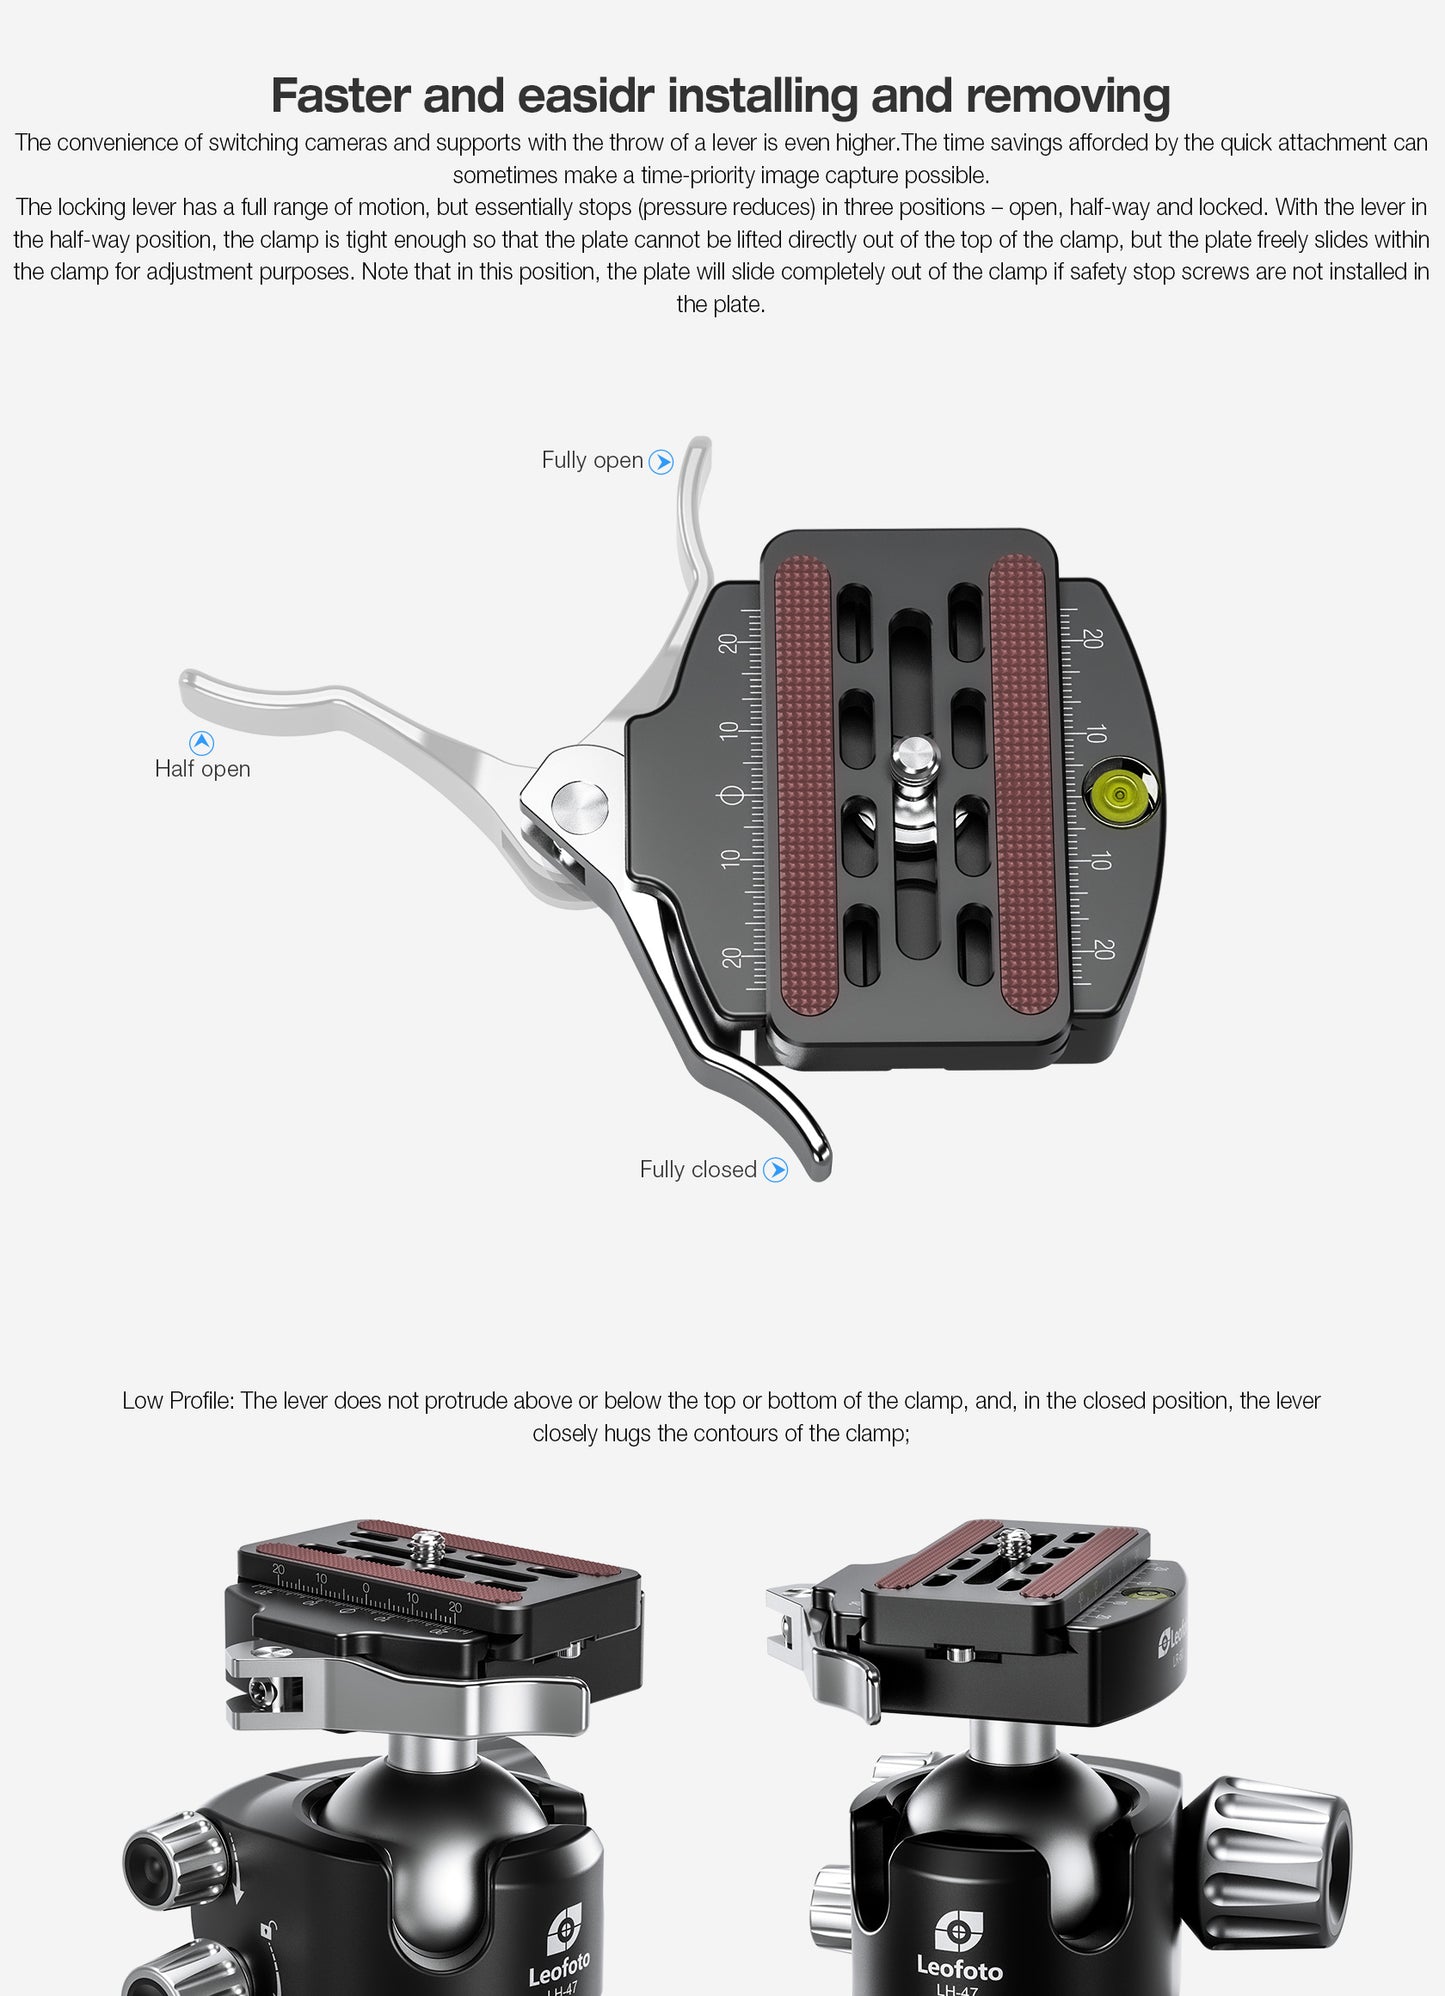 
                  
                    Leofoto LS-362C Professional Light Weight Carbon Fiber Tripod Kit
                  
                